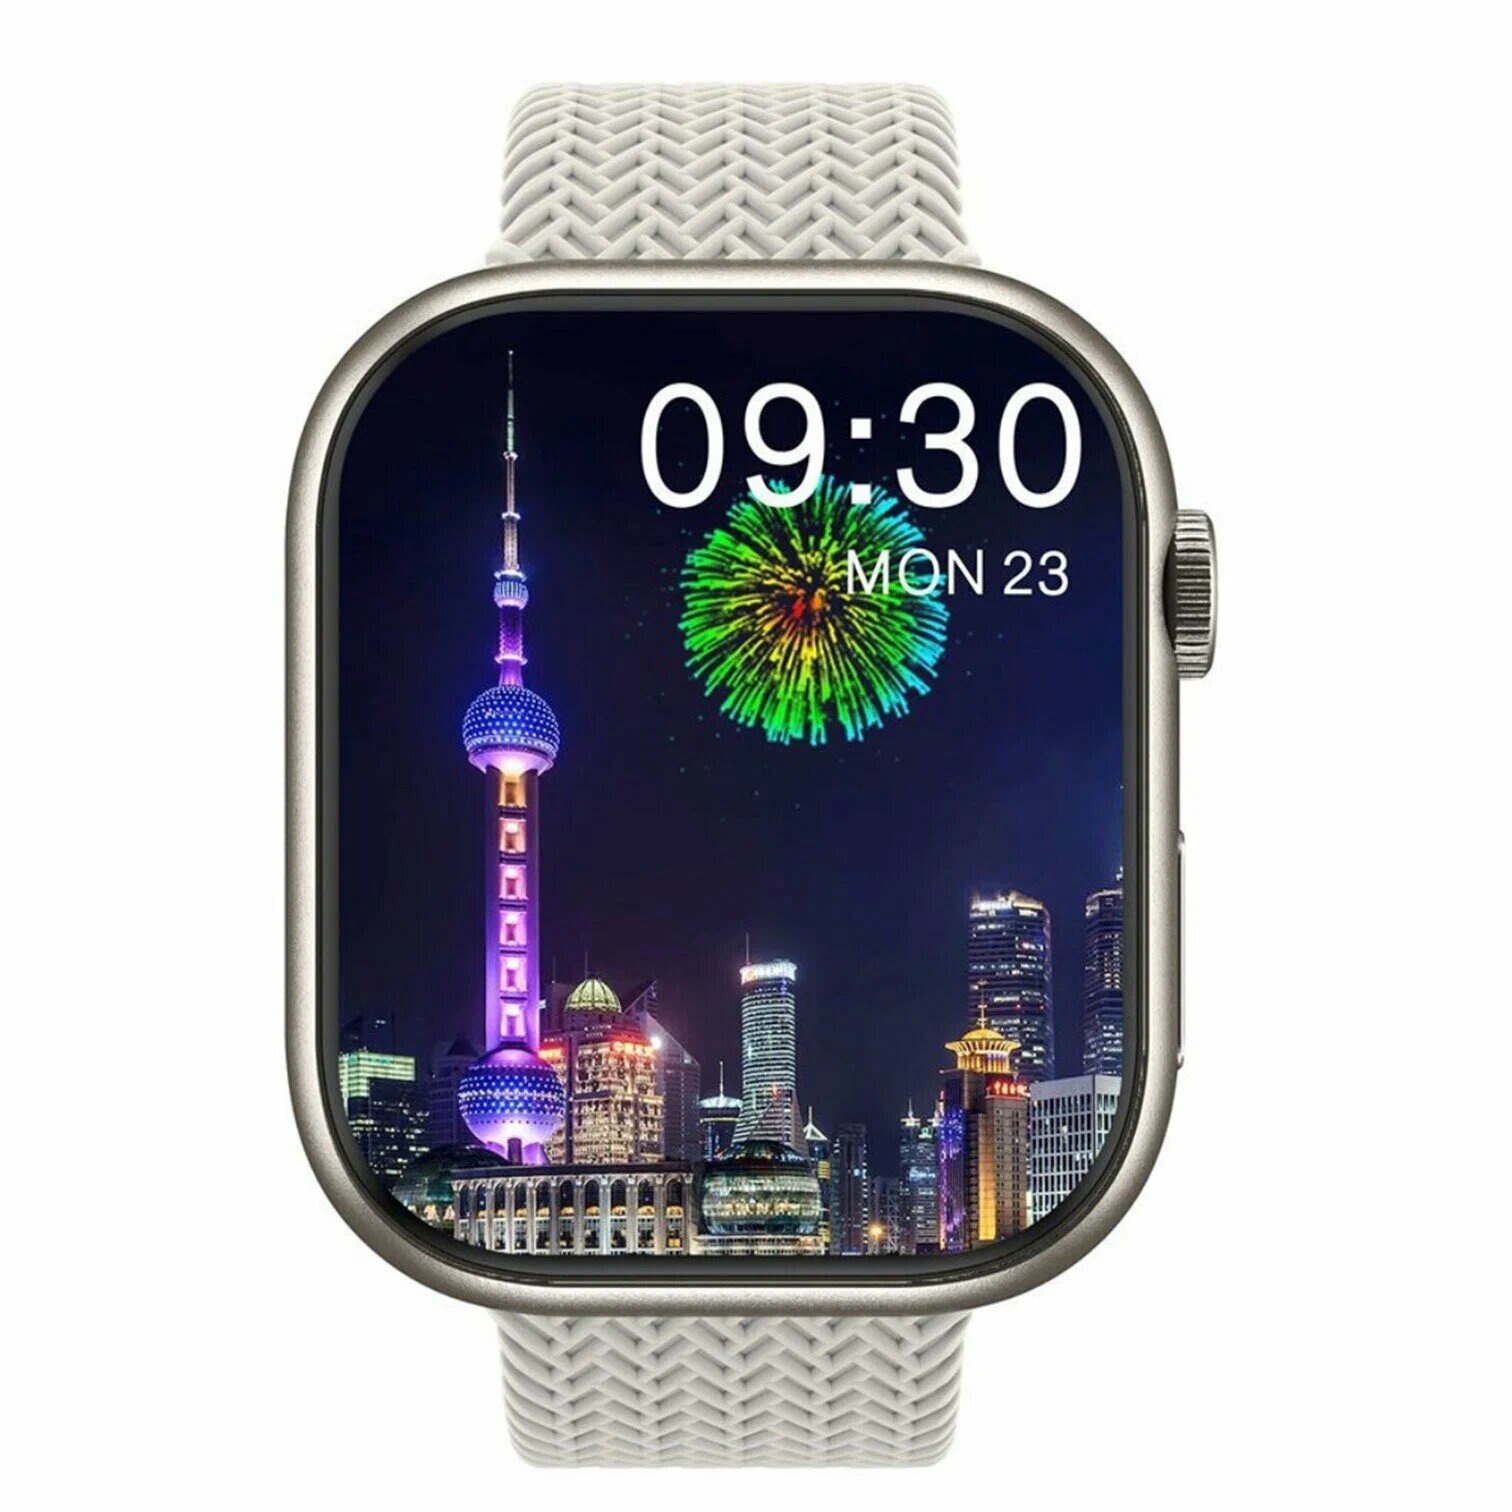 Cмарт часы HK9 PRO Умные часы PREMIUM Series Smart Watch Amoled Display iOS Android Bluetooth звонки Уведомления Серебристые Pricemin